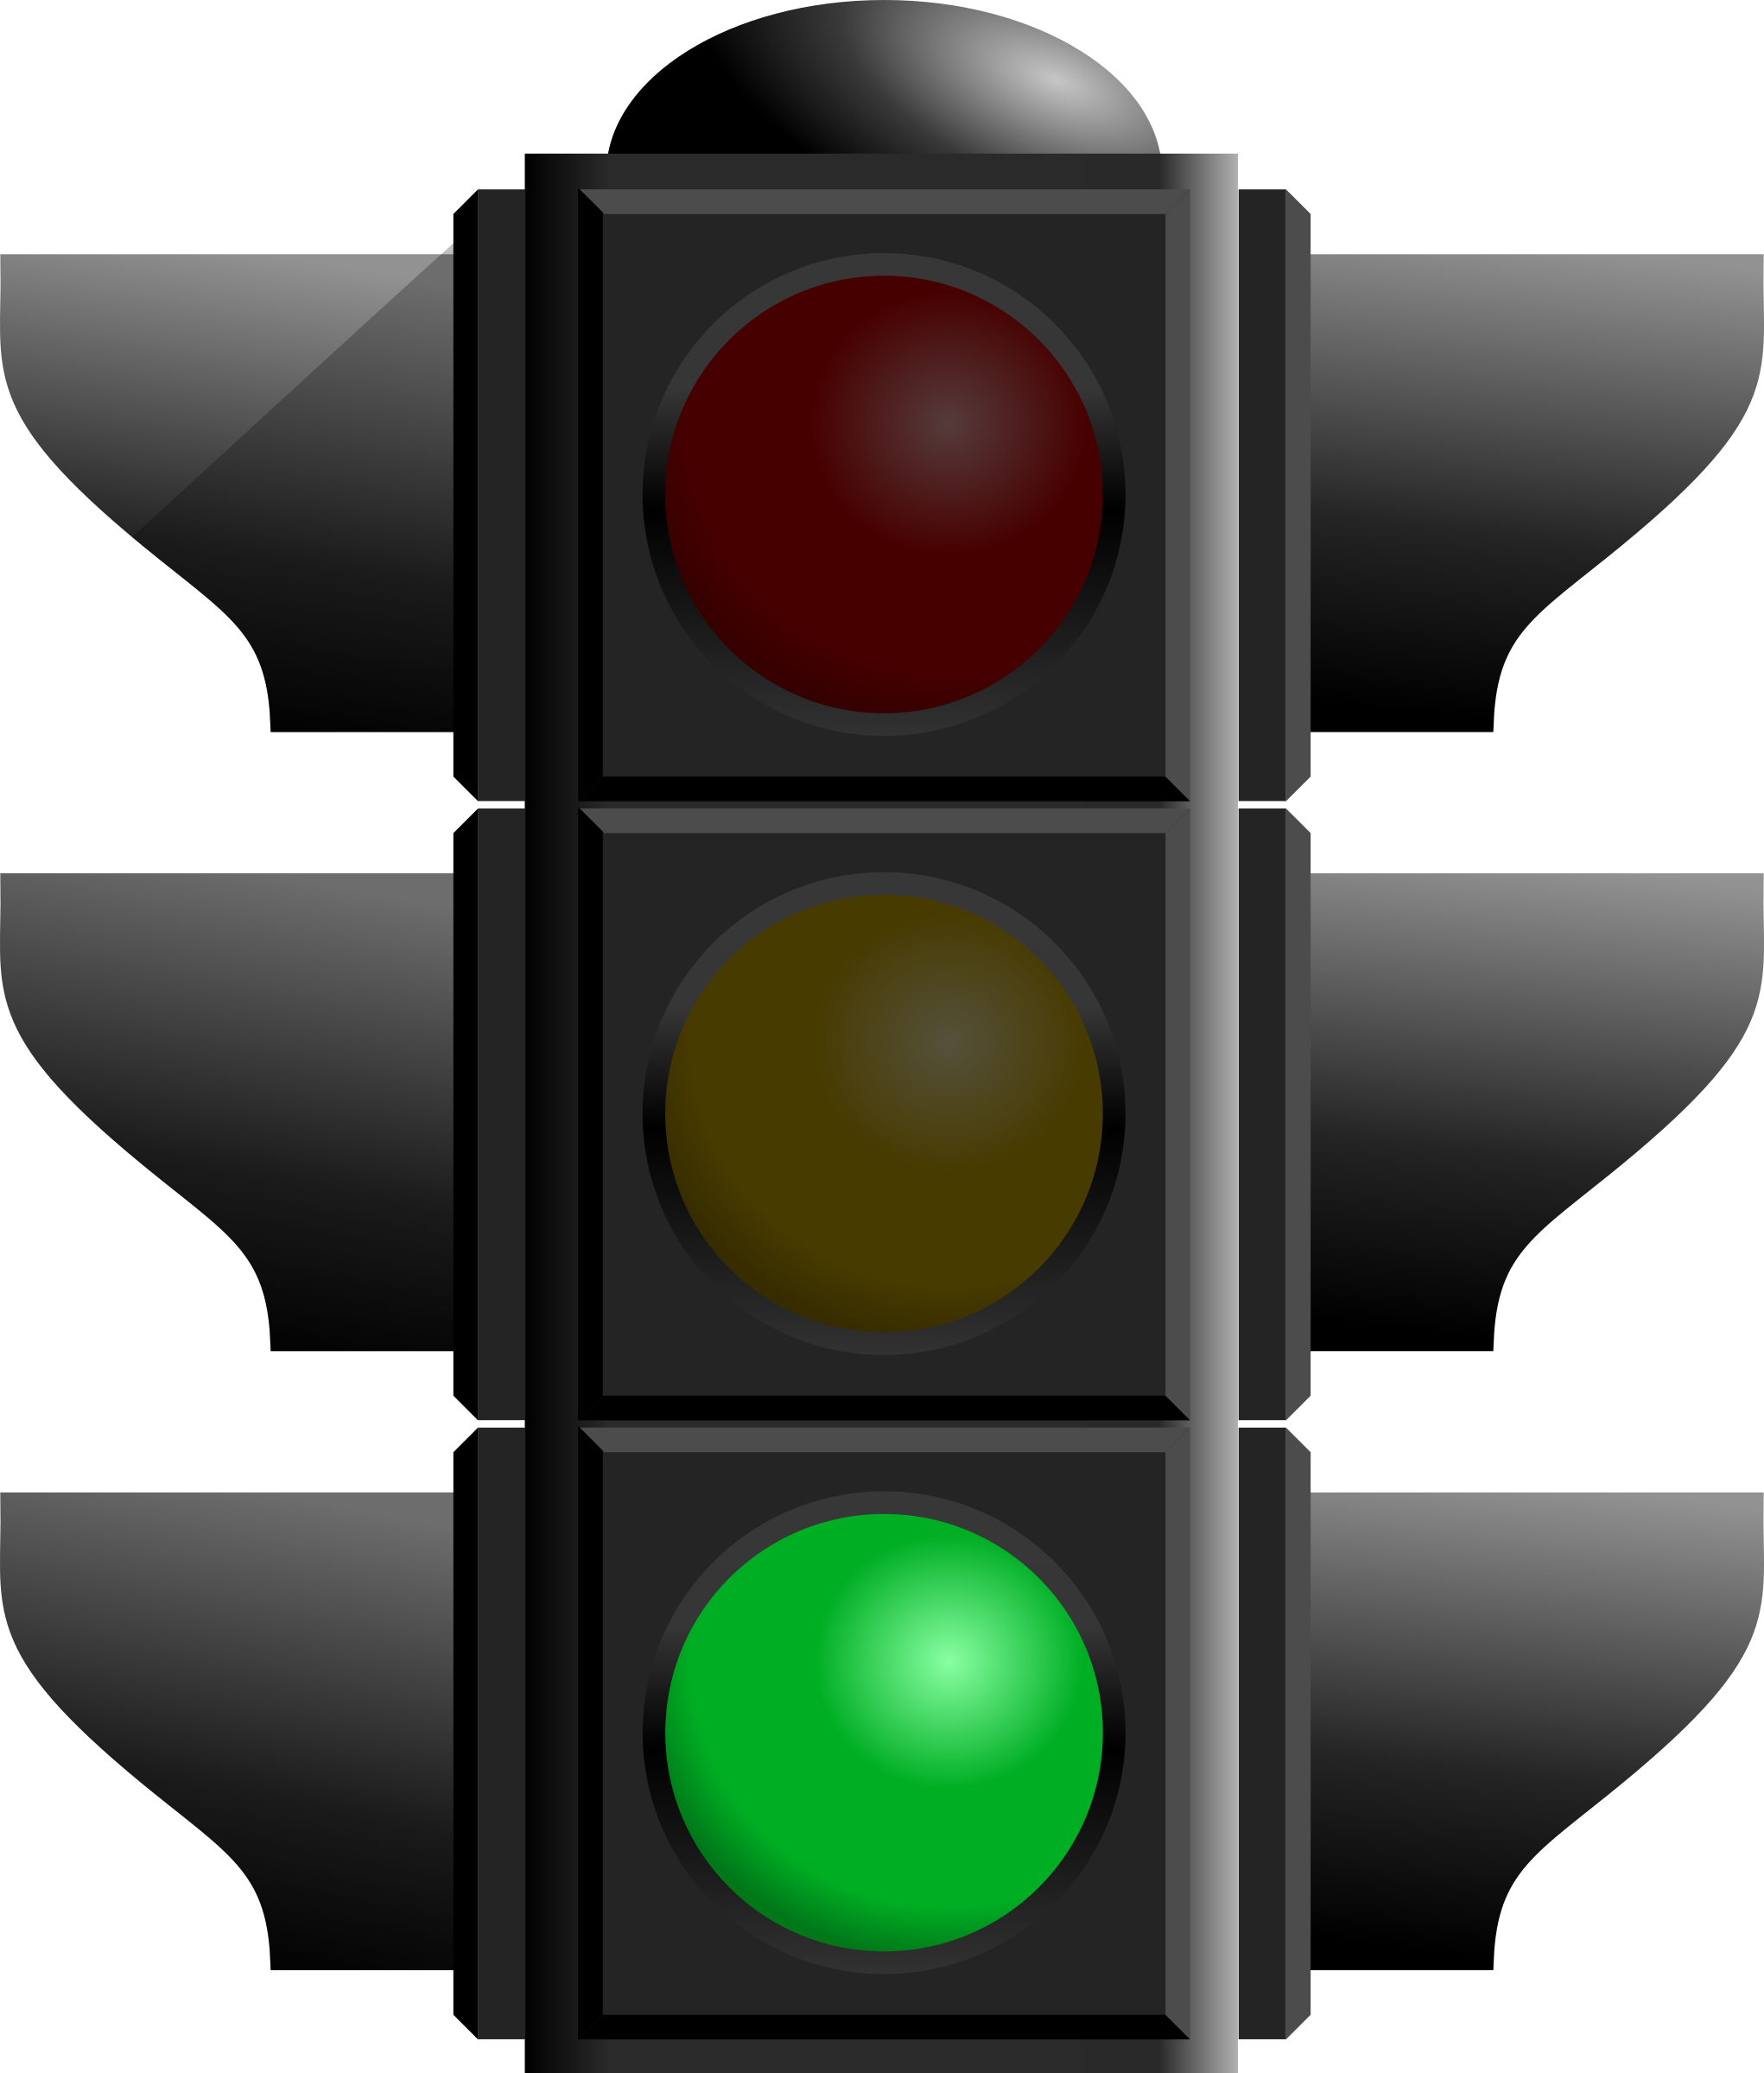 A Traffic Light With A Green Light